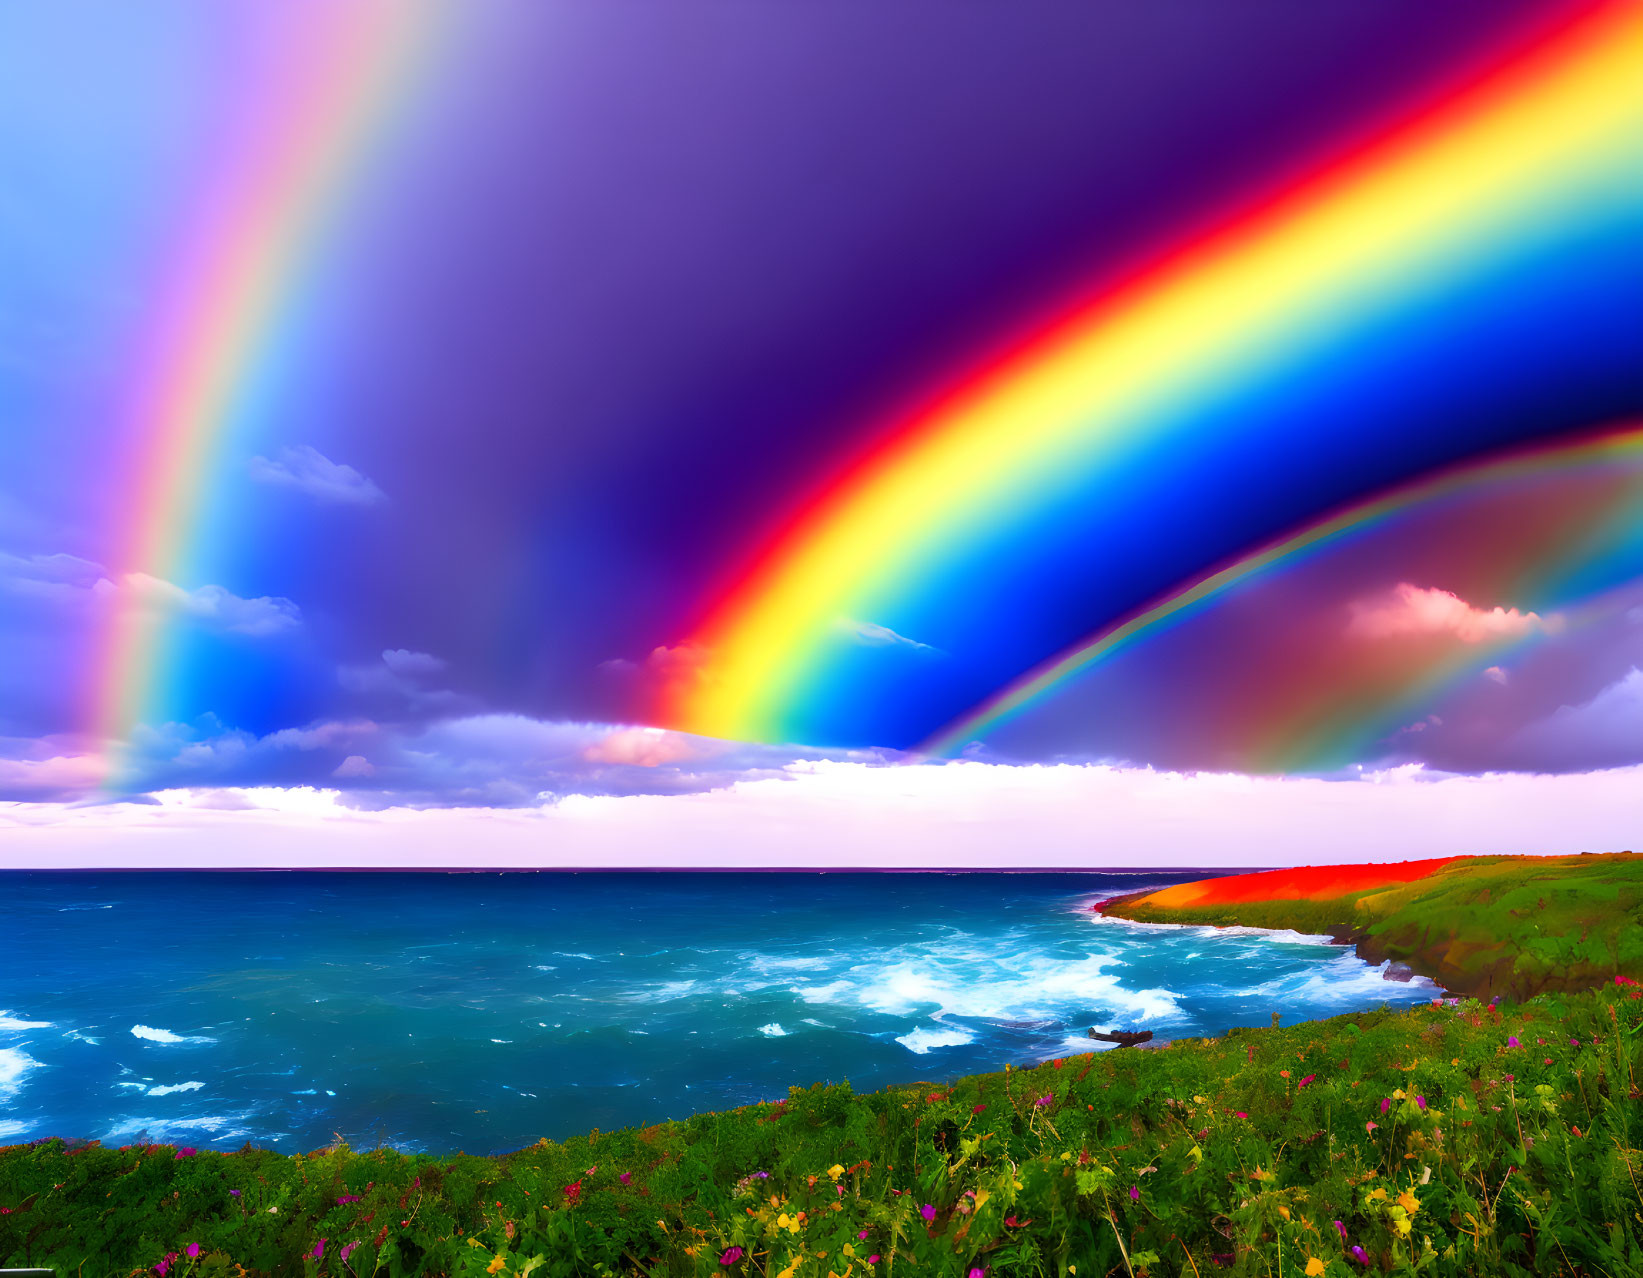 Double Rainbow Over Turbulent Sea and Flower-Covered Coastline